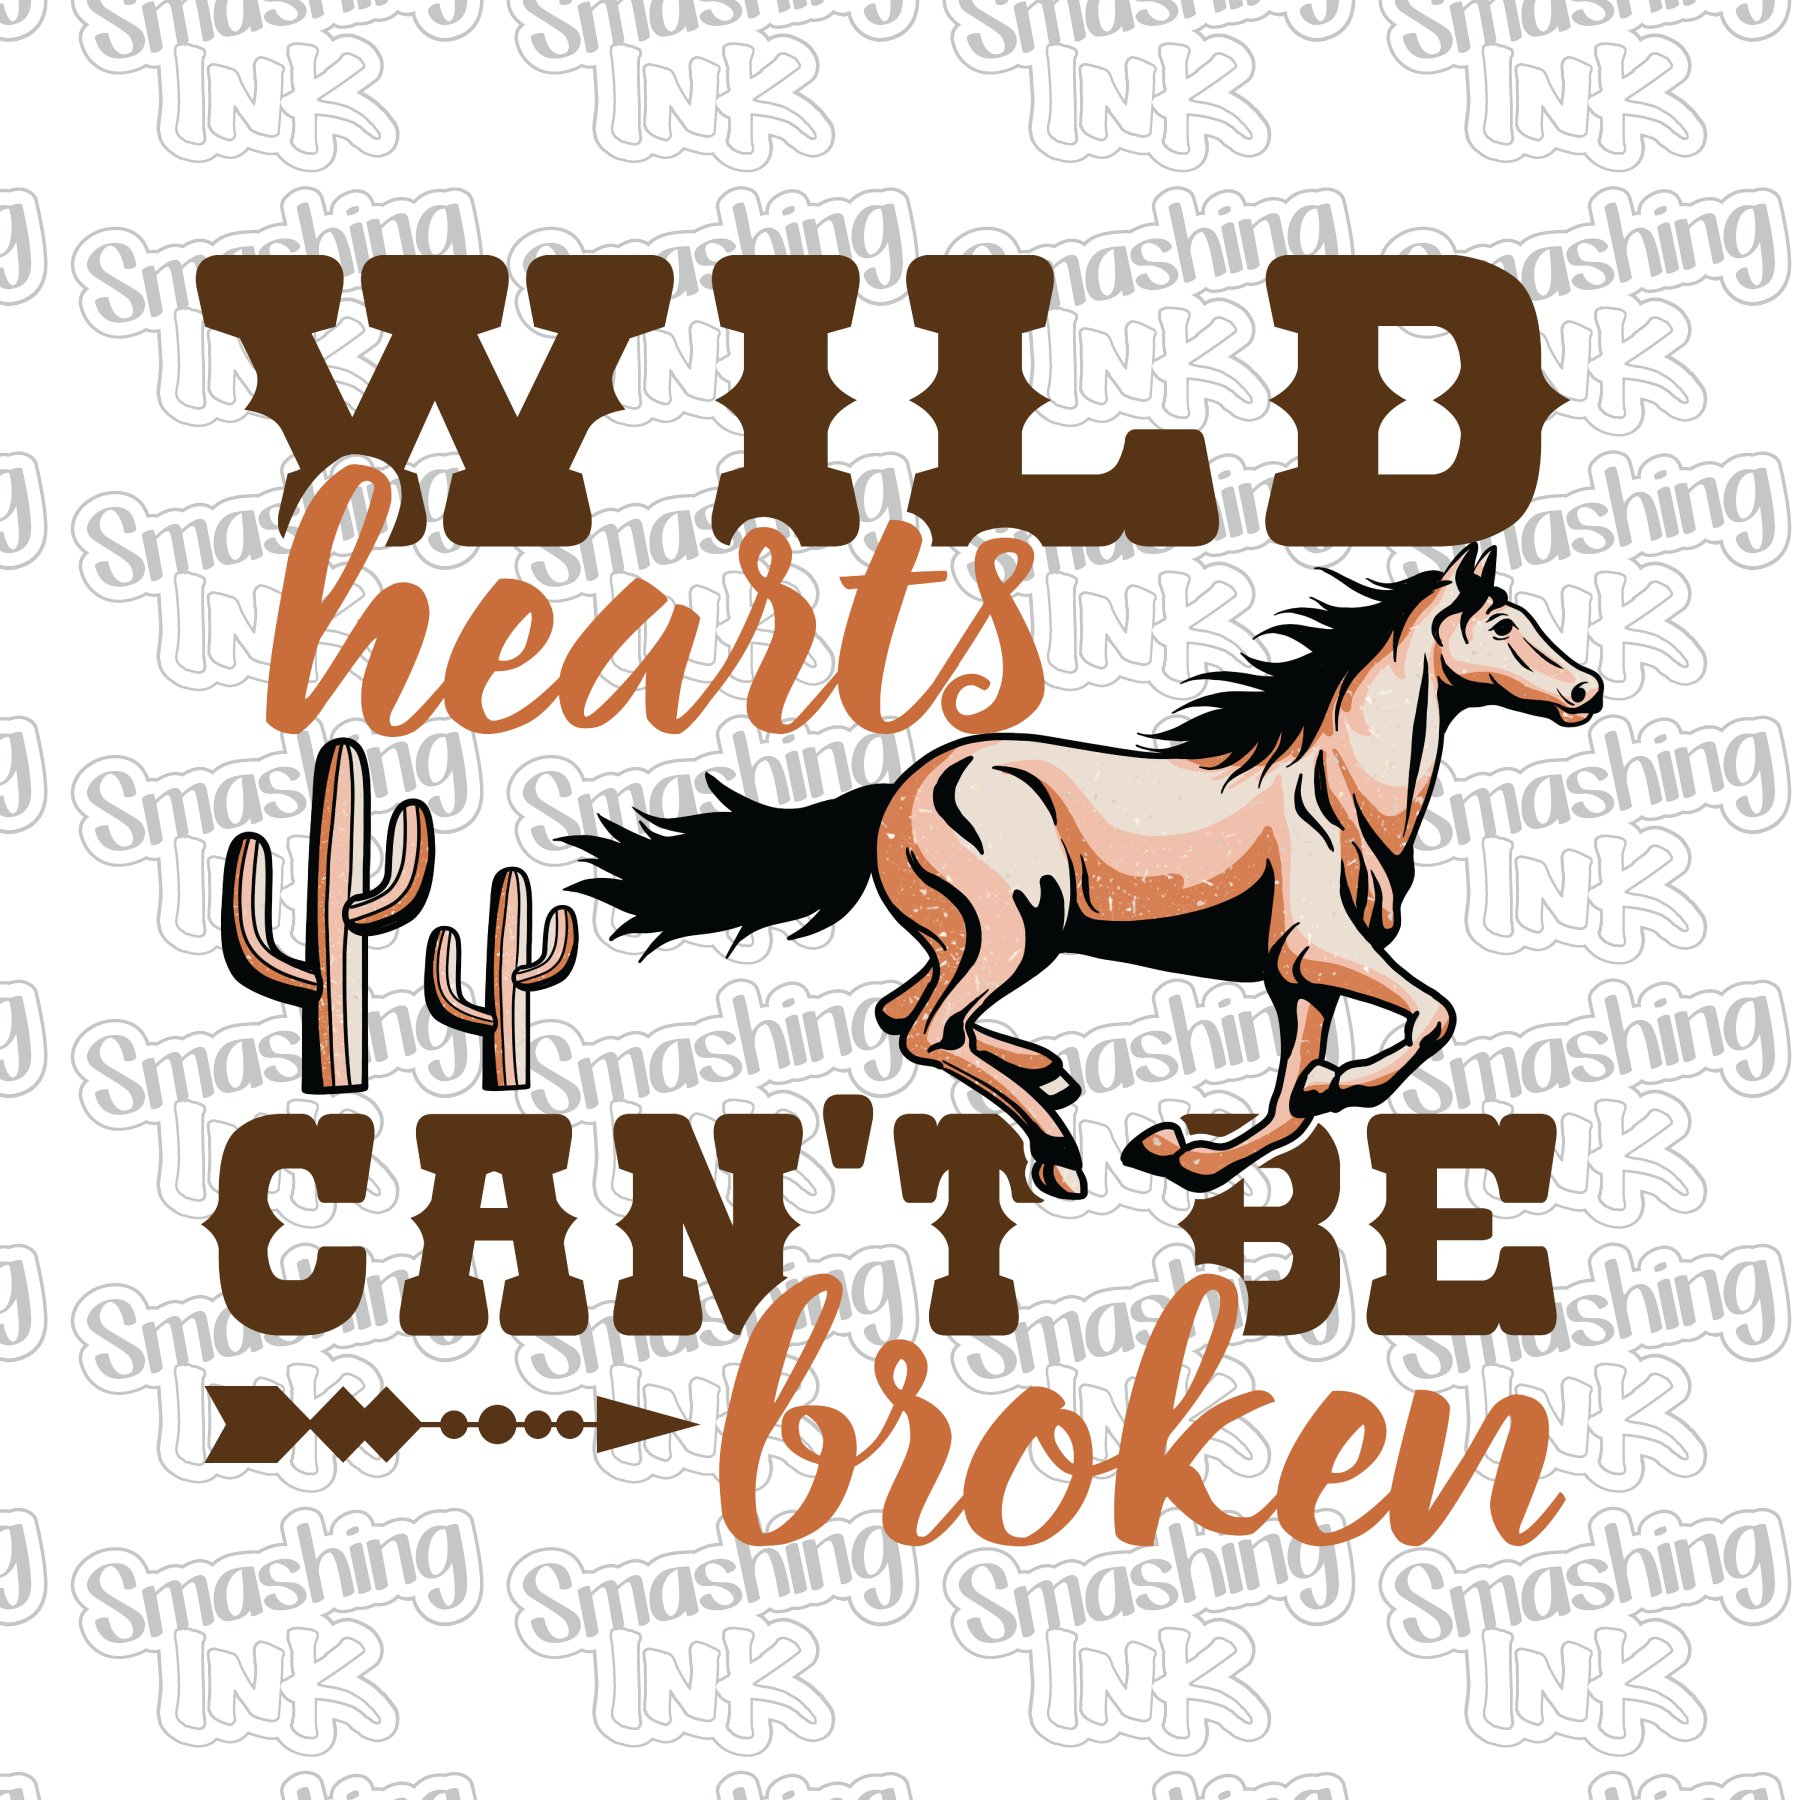 Wild Hearts Can't Be Broken